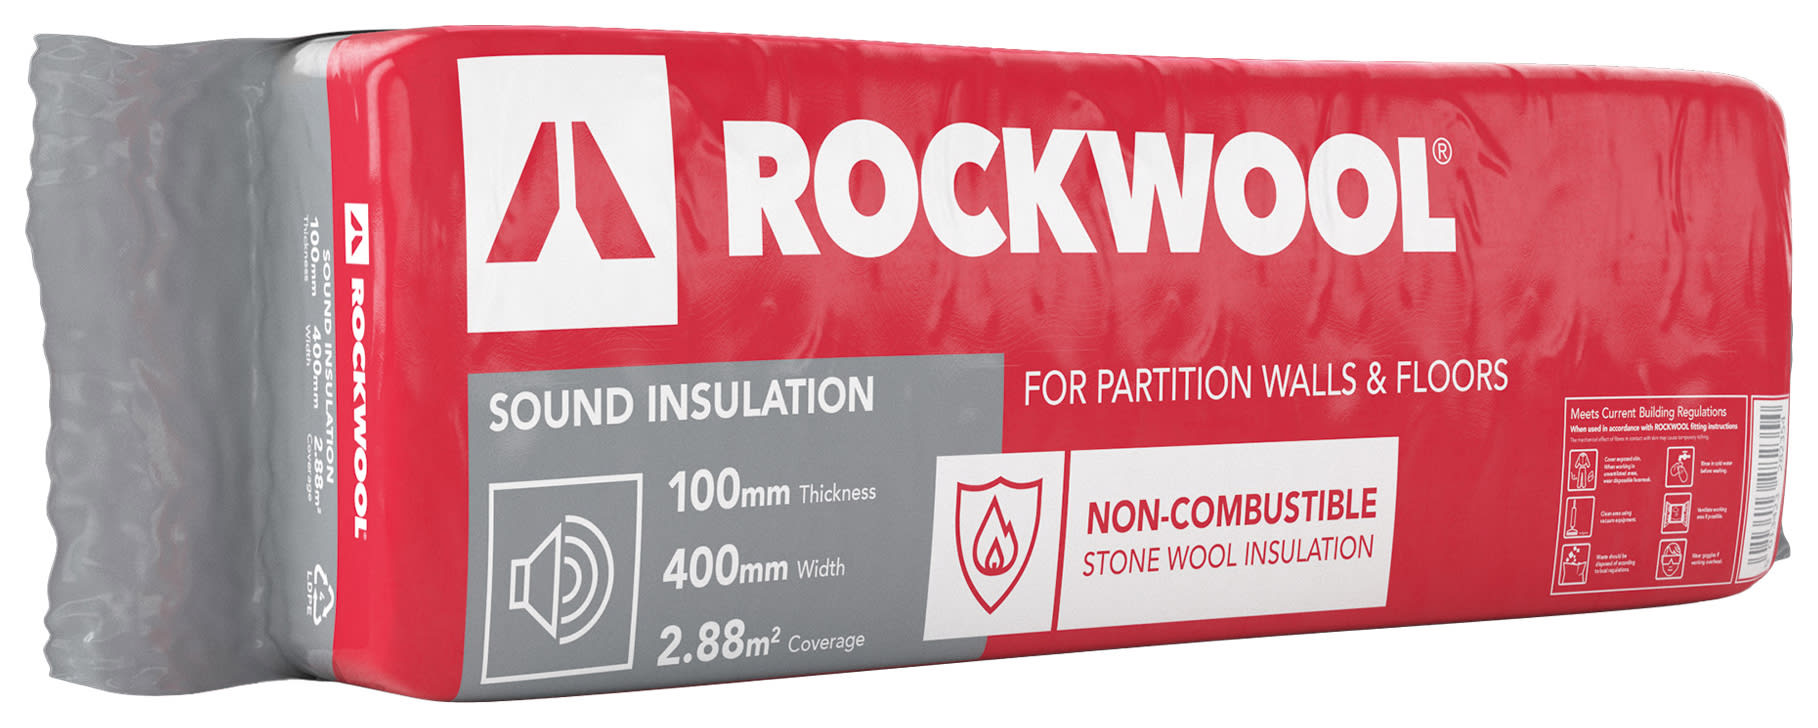 Rockwool Sound Insulation Slab - 100 x 400mm